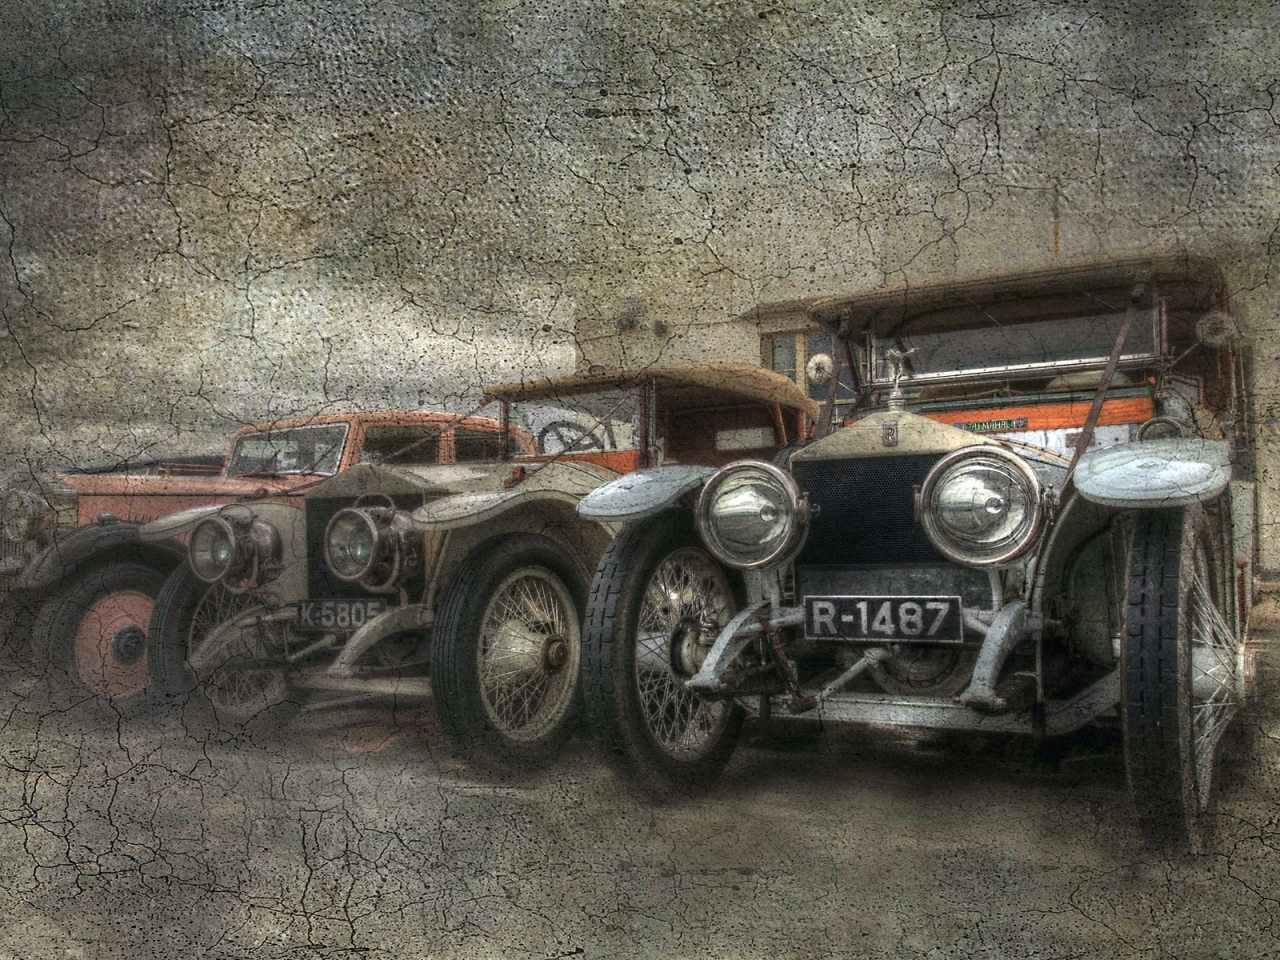 Vintage Car Poster for 1280 x 960 resolution